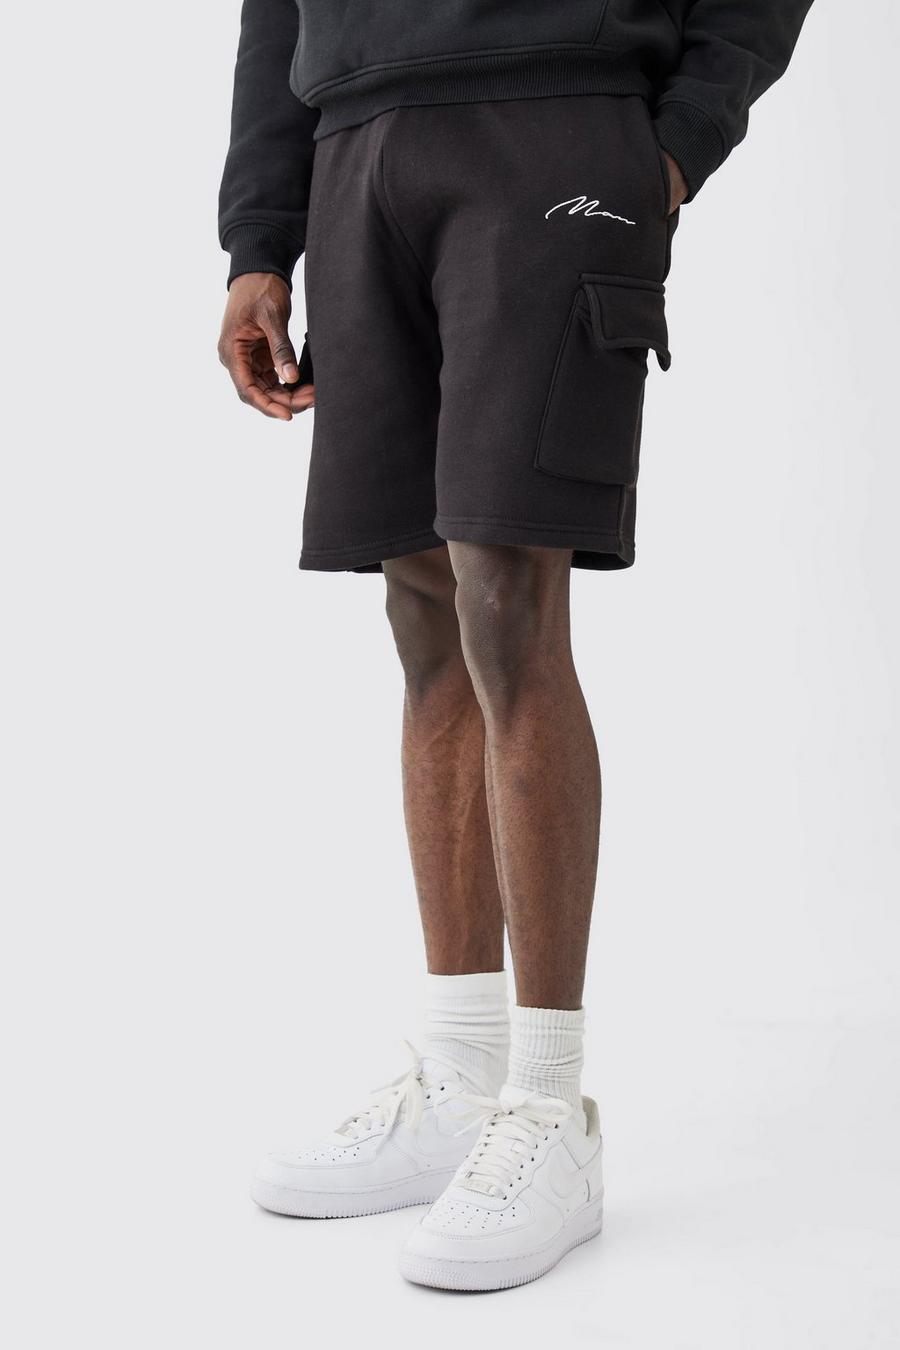 Lockere mittellange Man Signature Cargo-Shorts, Black